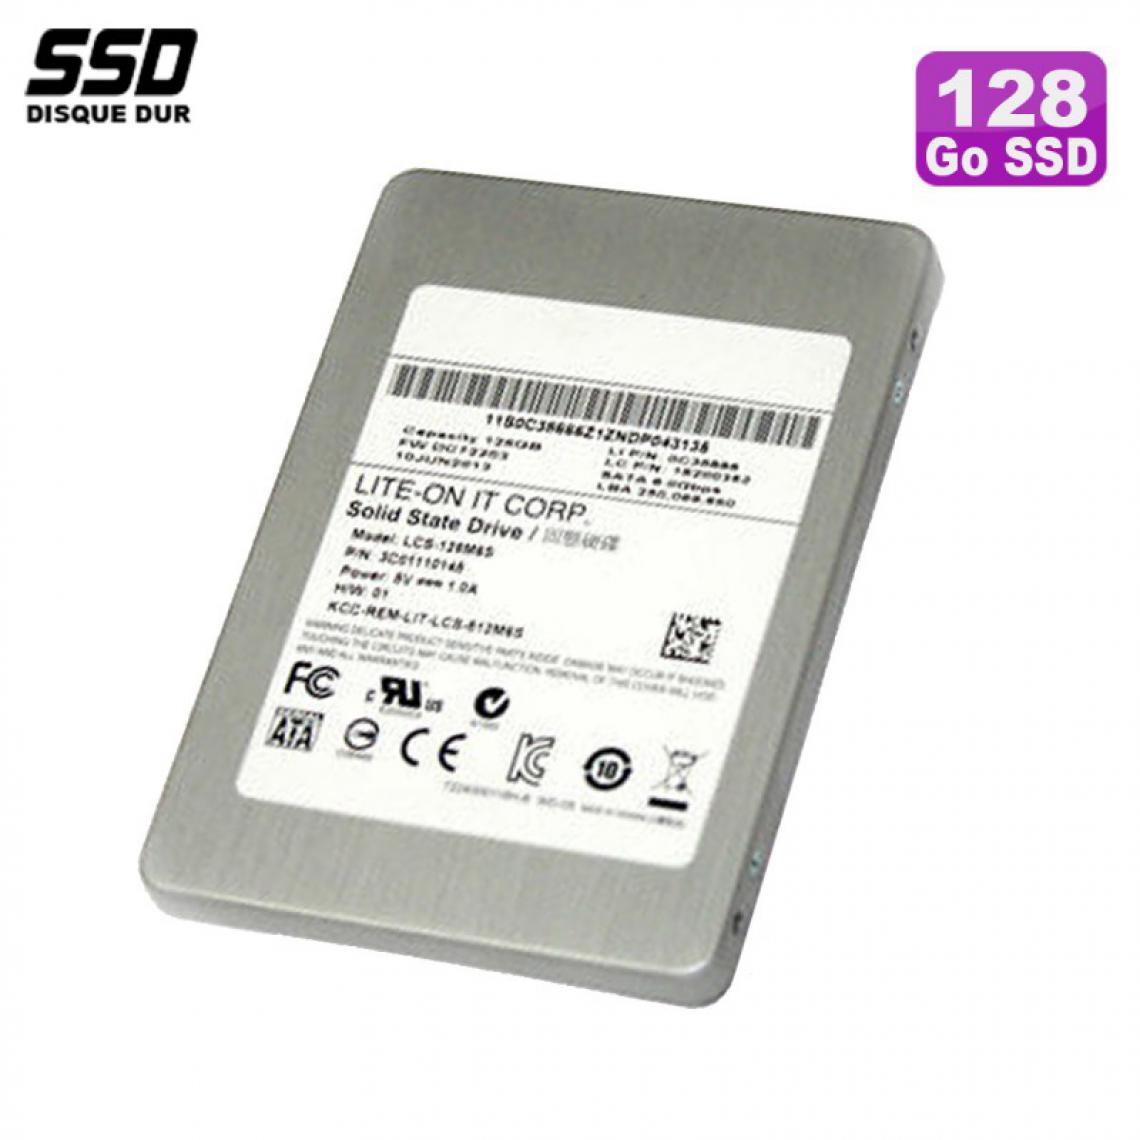 Lite-On - SSD 128Go 2.5" LITE-ON LCS-128M6S 3C01110145 0C41178 16200352 0C19816 45K0639 - Disque Dur interne